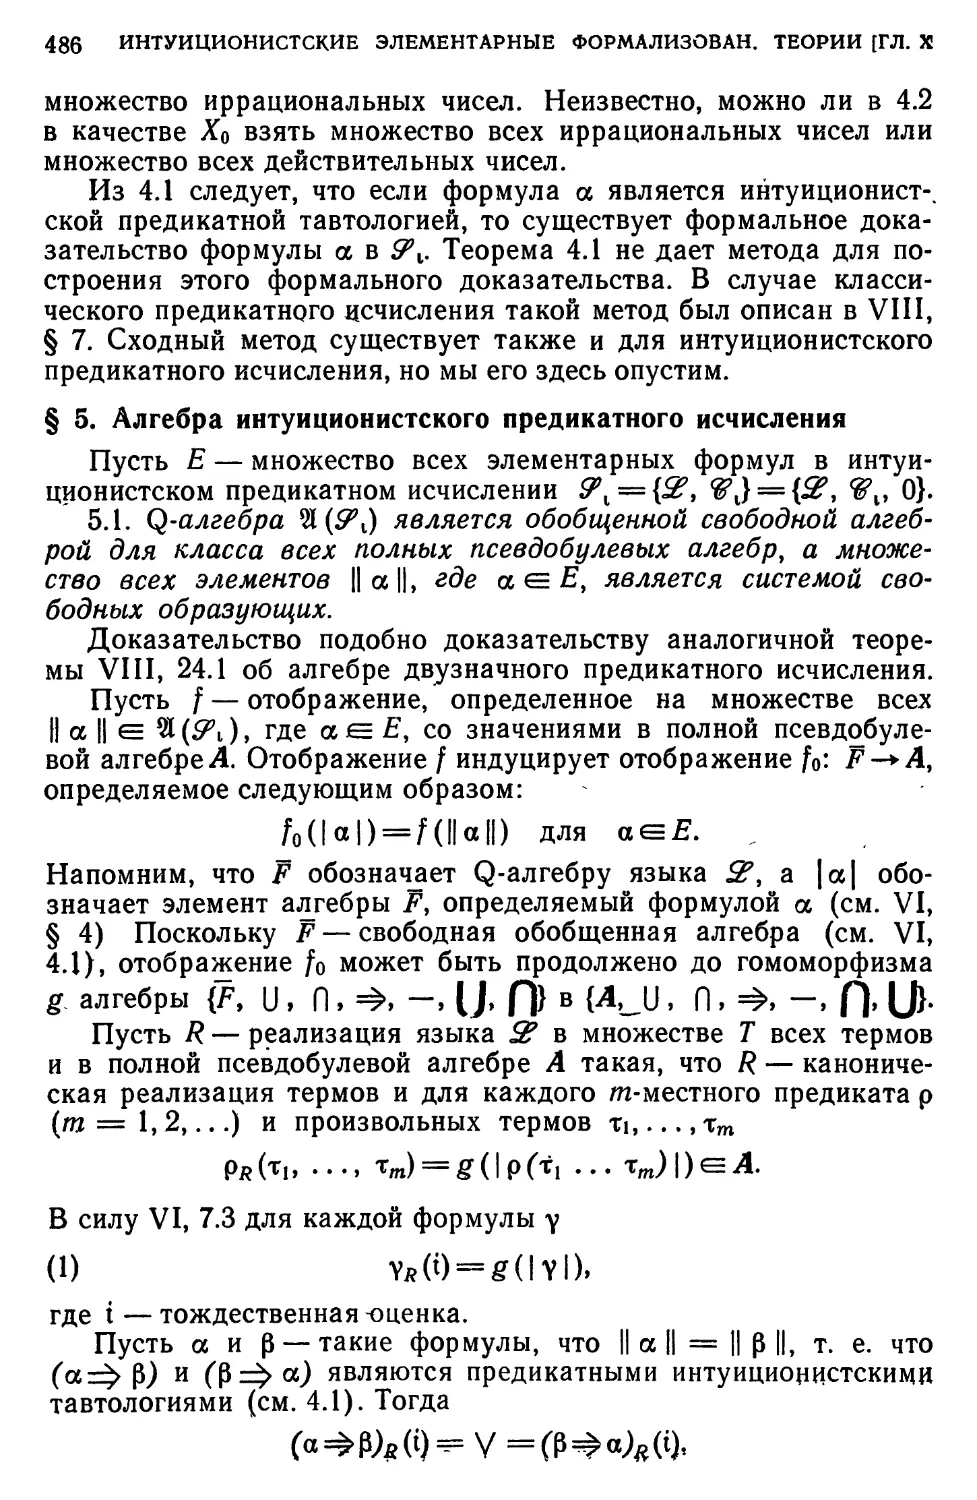 § 5. Алгебра интуиционистского предикатного исчисления